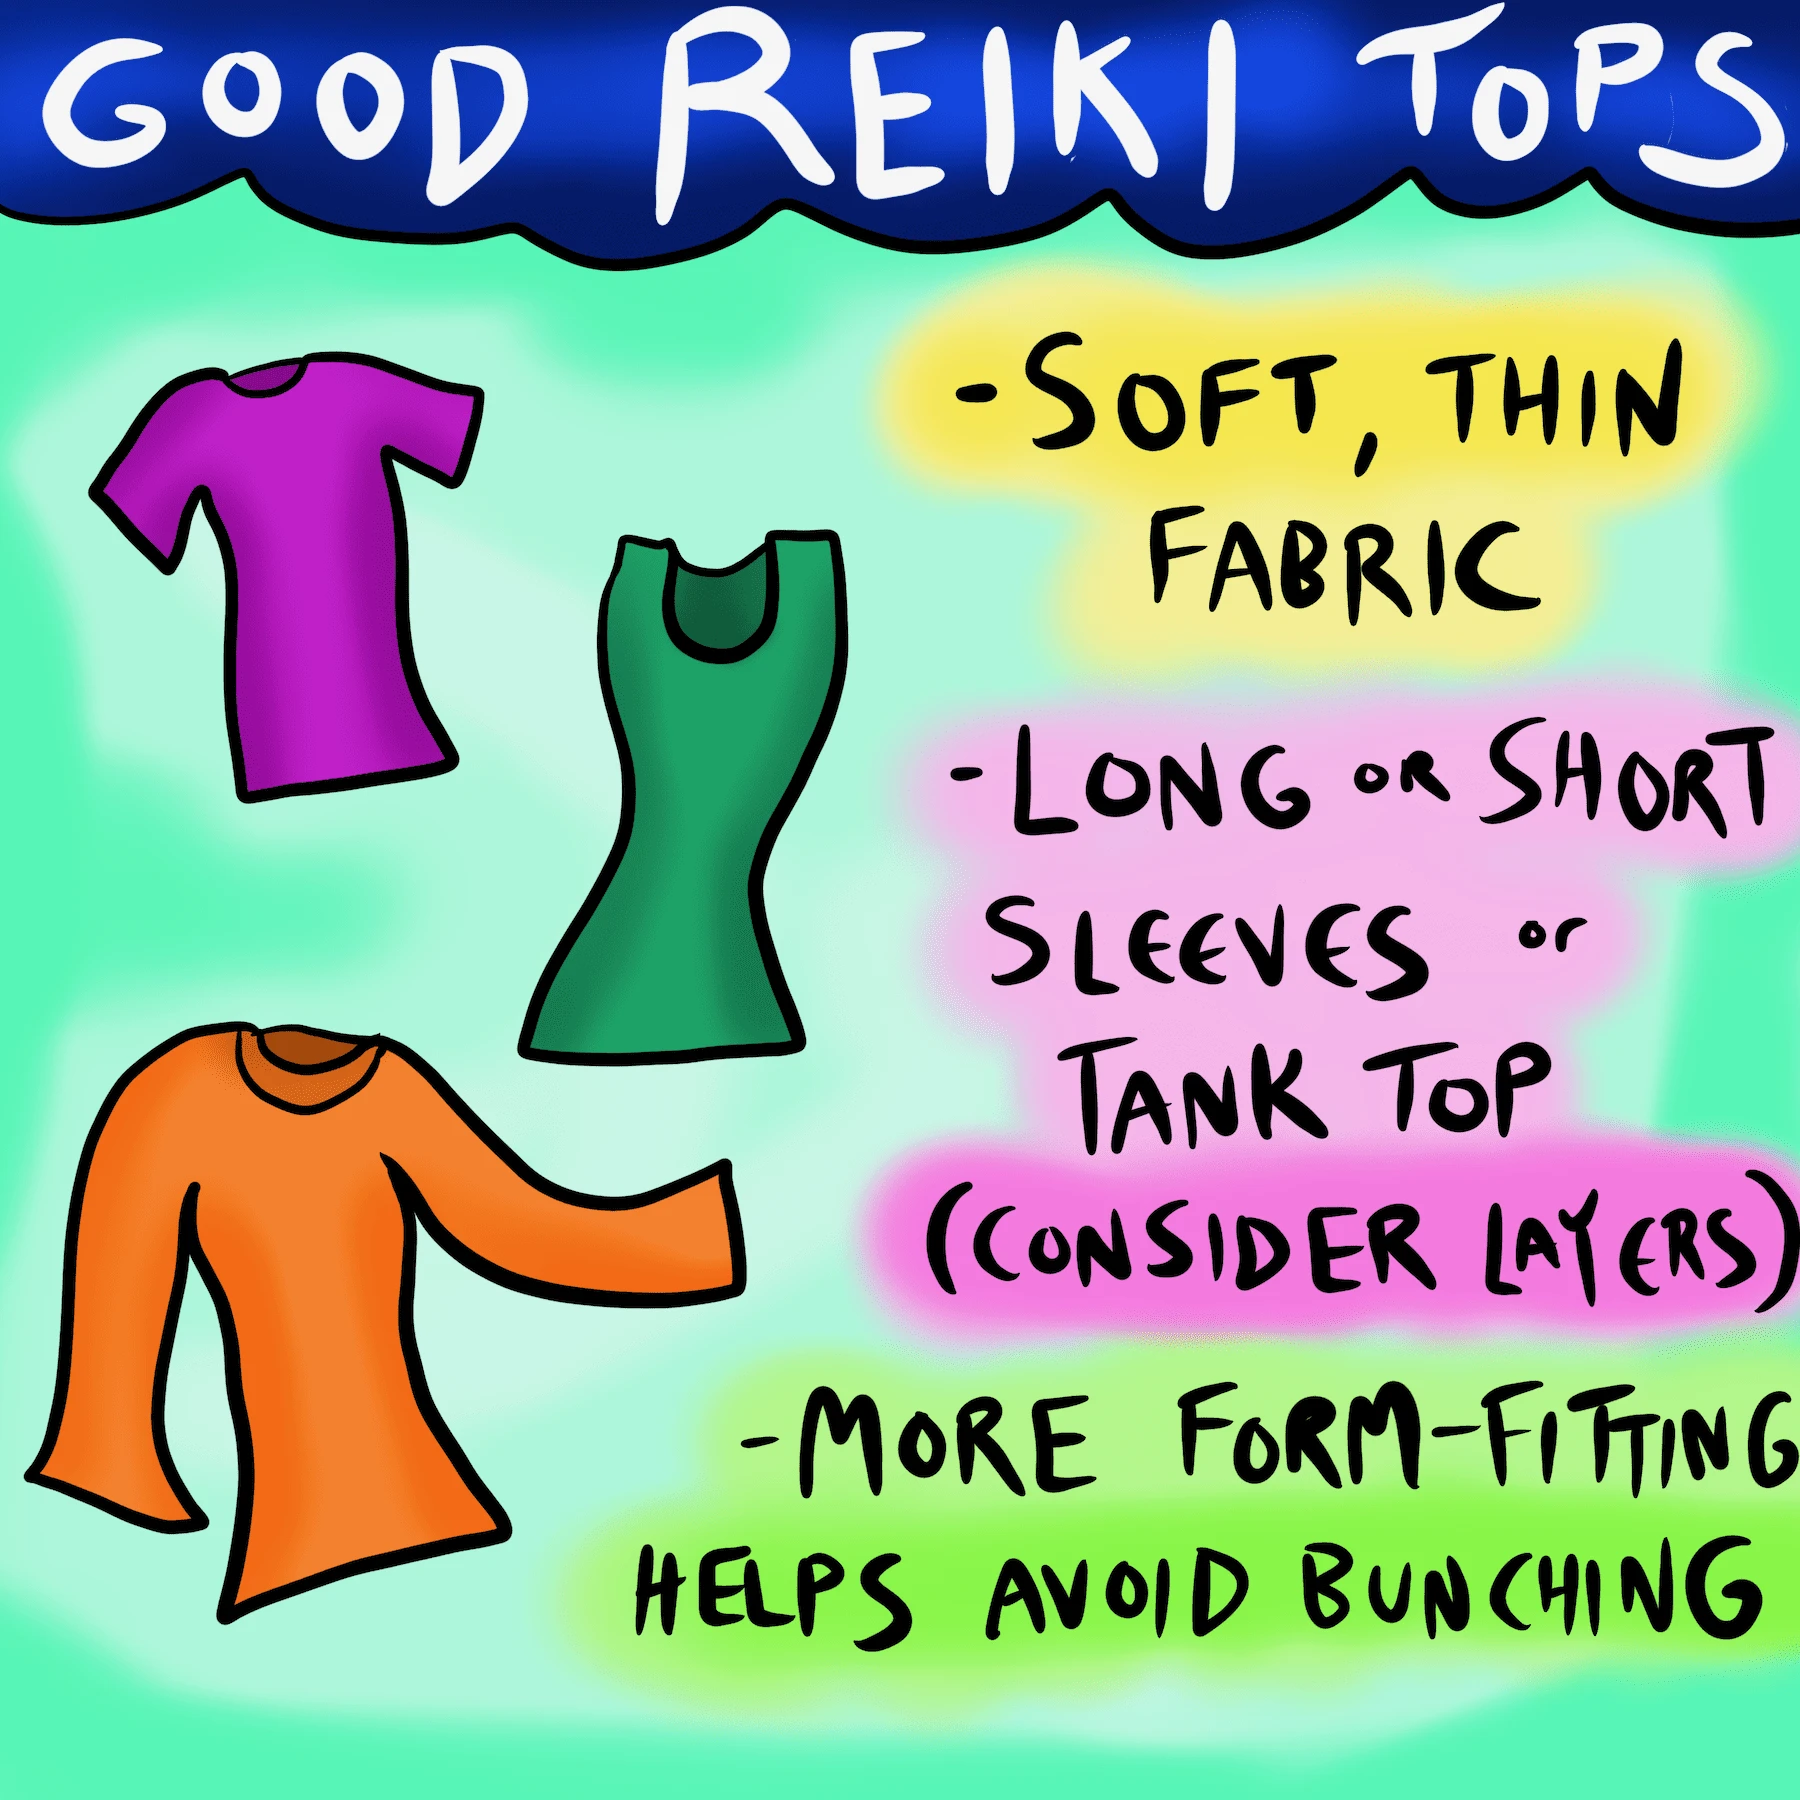 Reiki outfits: Tops.